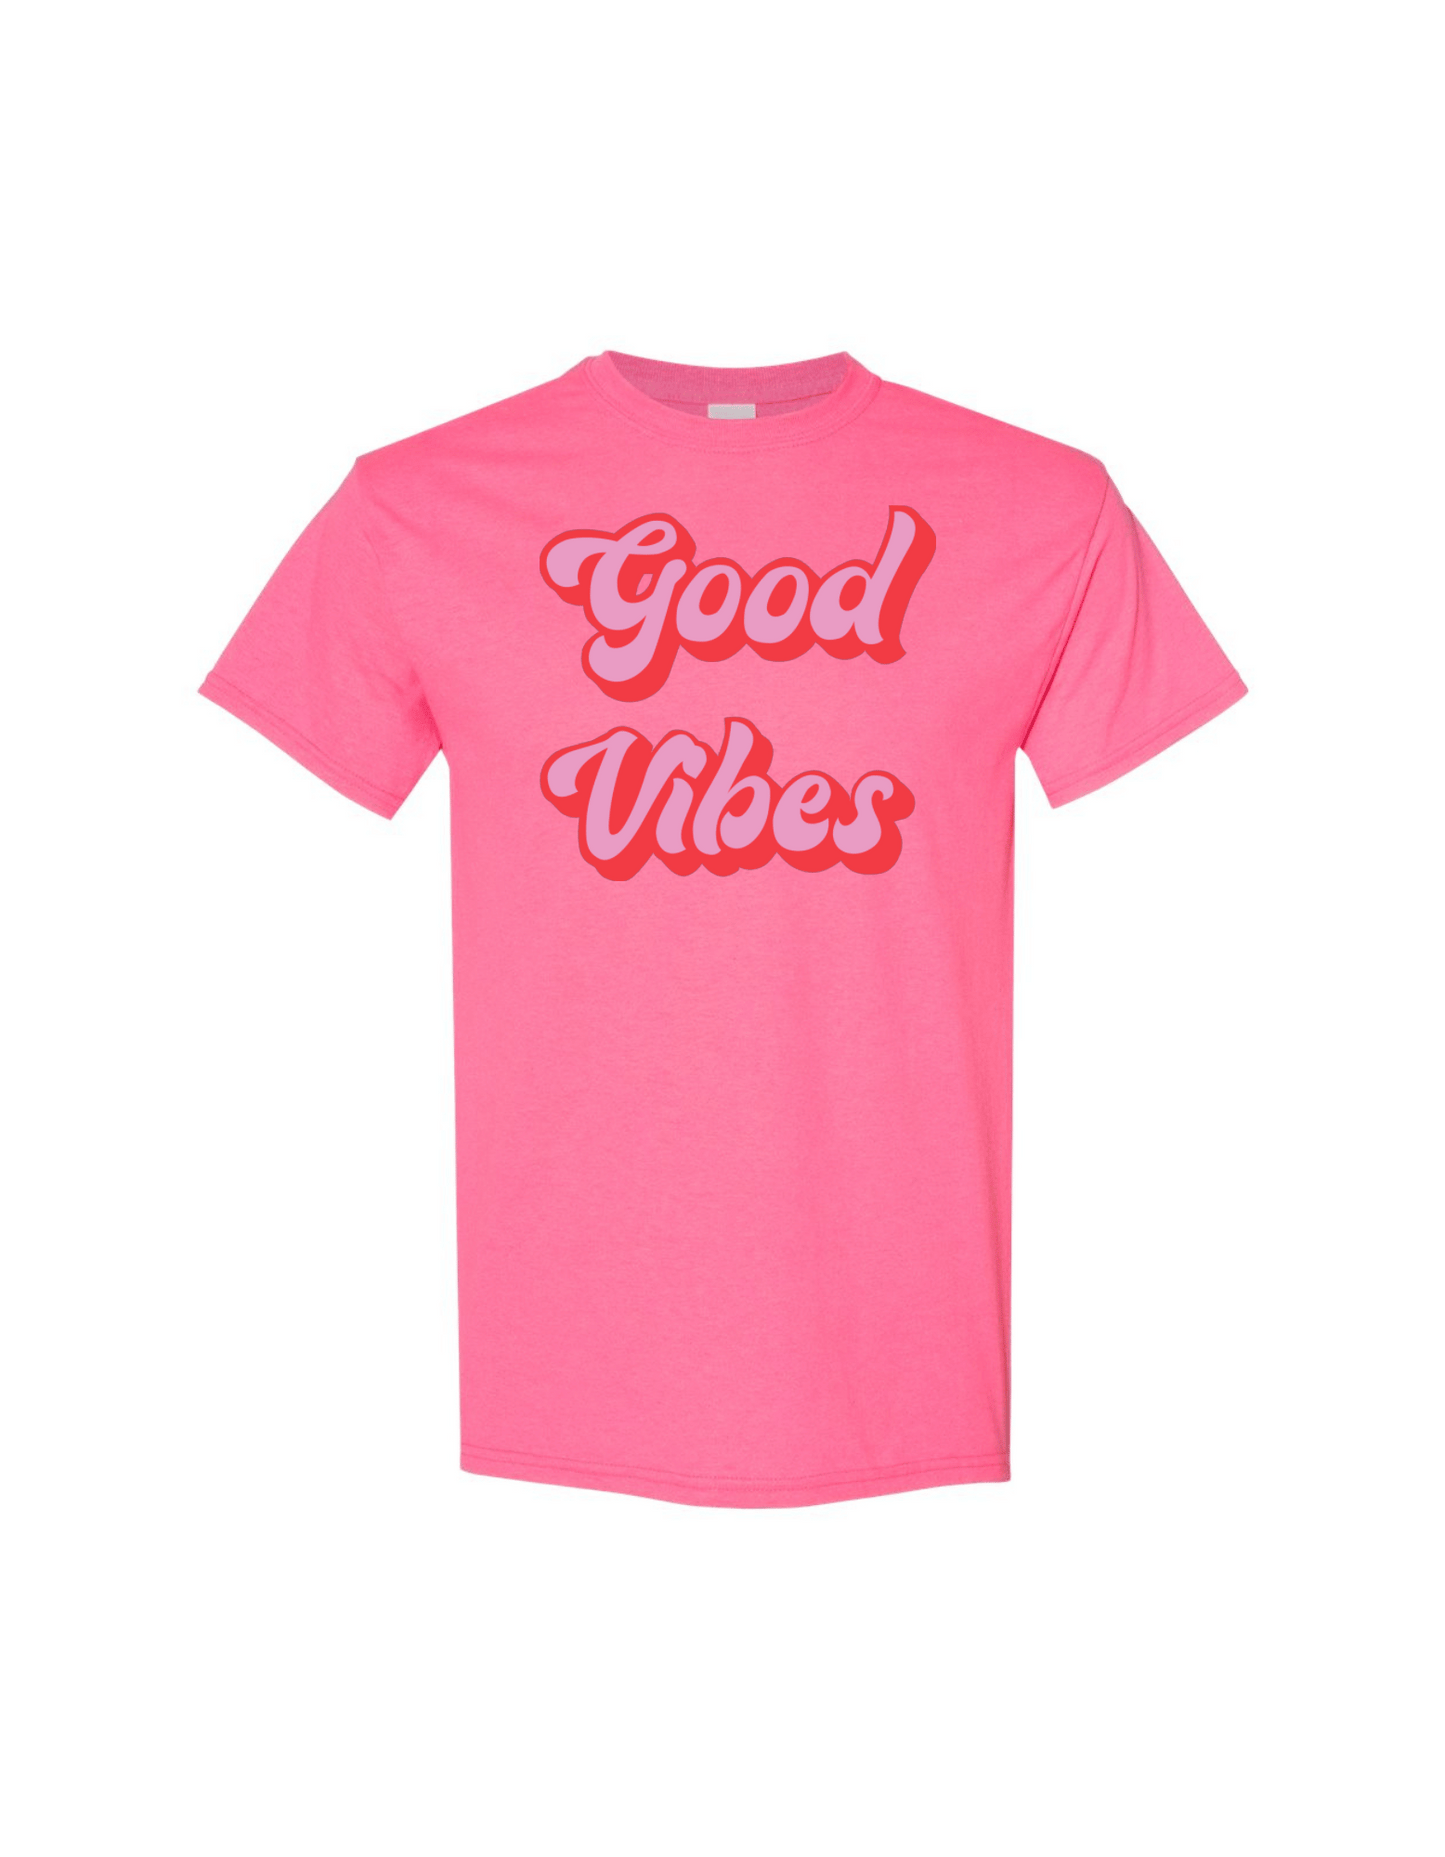 Made to Order Handmade Good Vibes Inspirational Short Sleeve Shirt